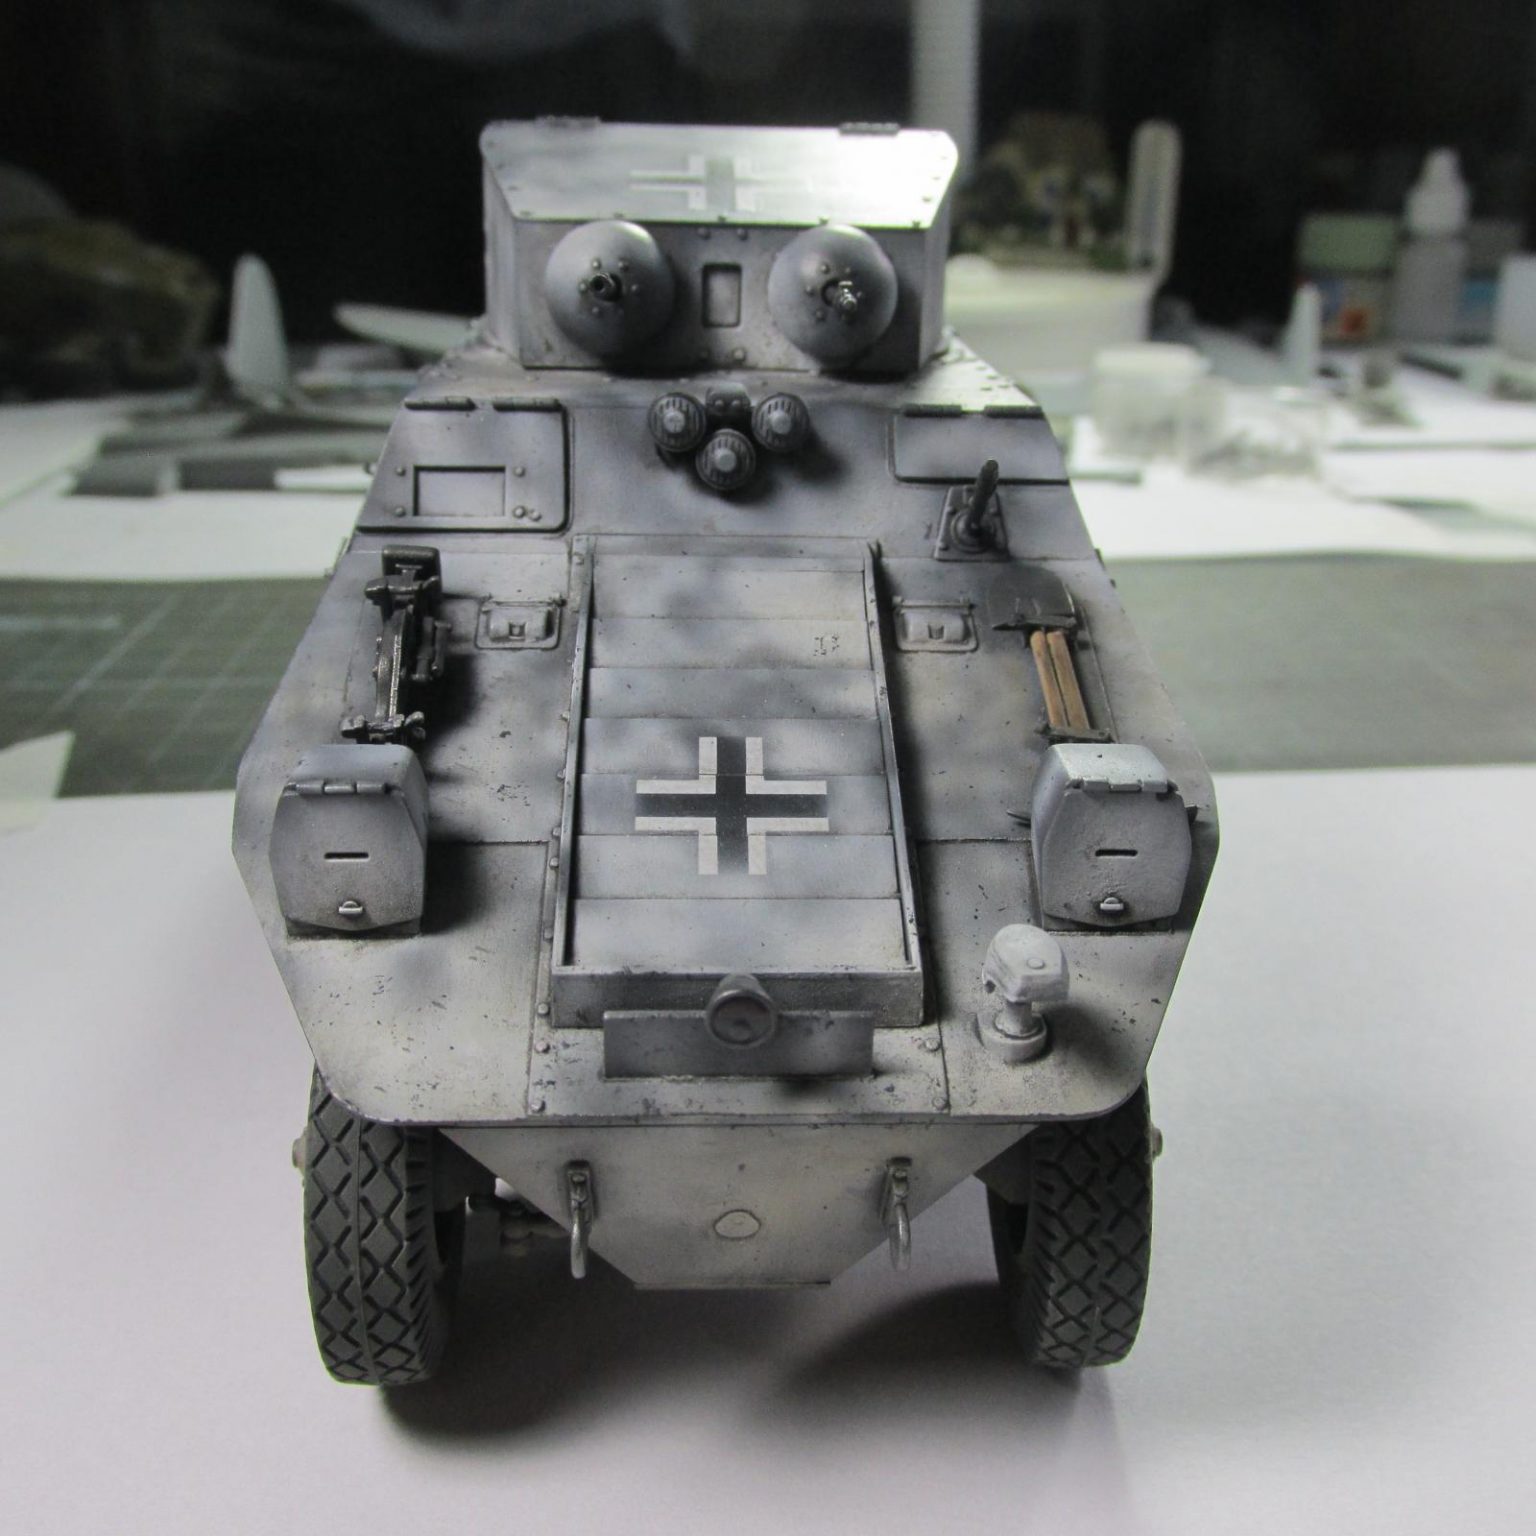 Wehrmacht ADGZ Armored Car Hobby Boss 1:35 - 1/35 - iModeler